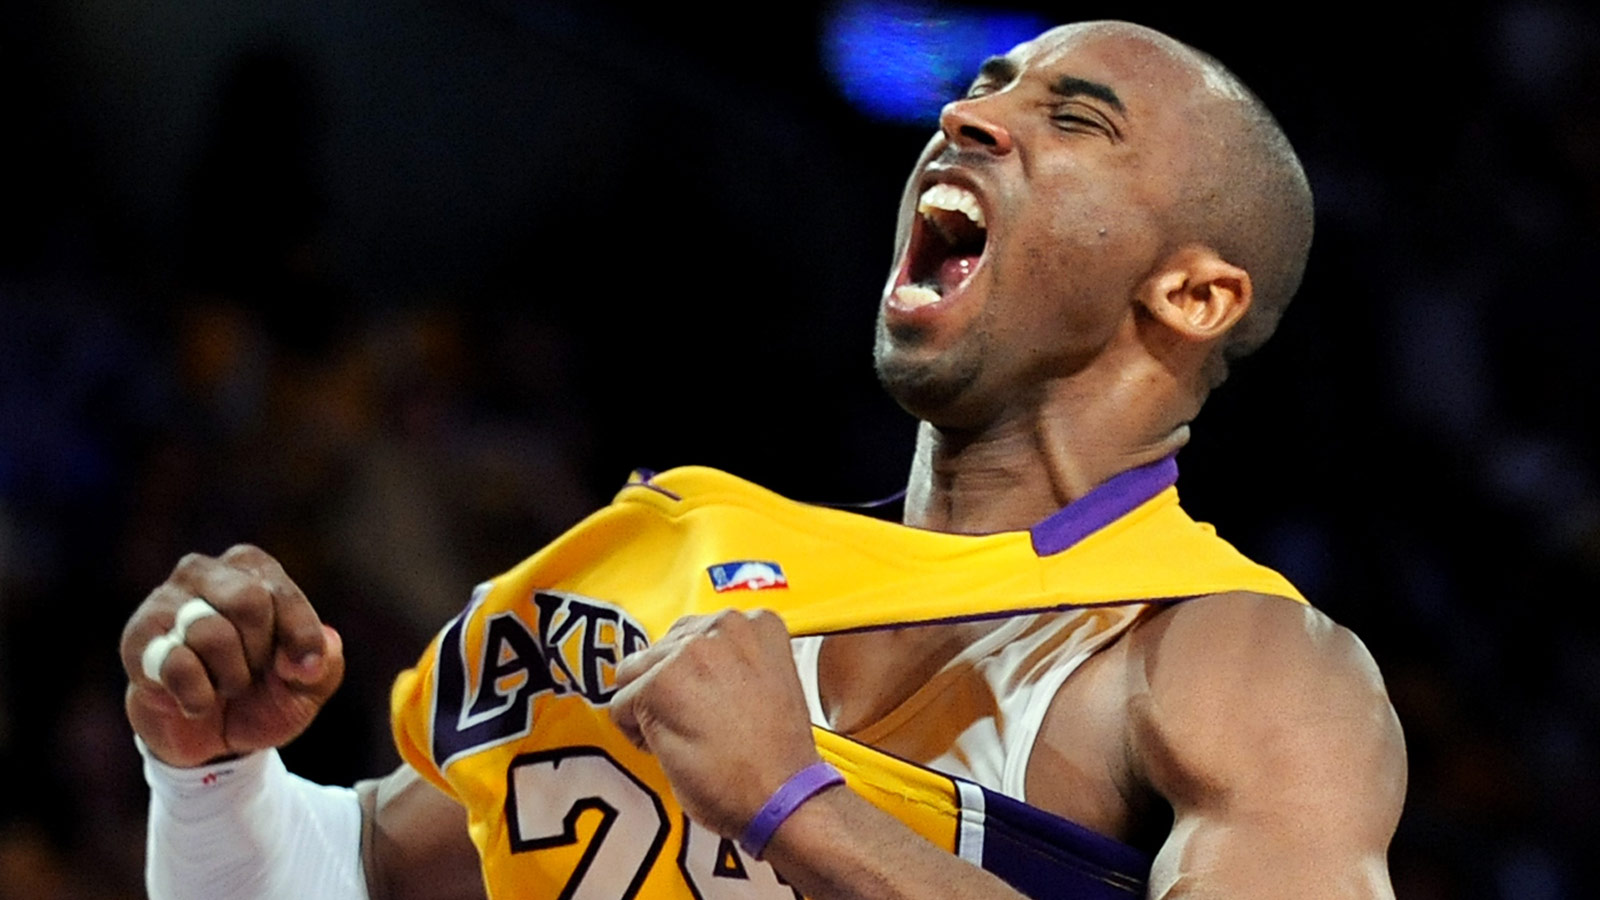 Kobe Bryant's iconic MVP jersey heads to auction 